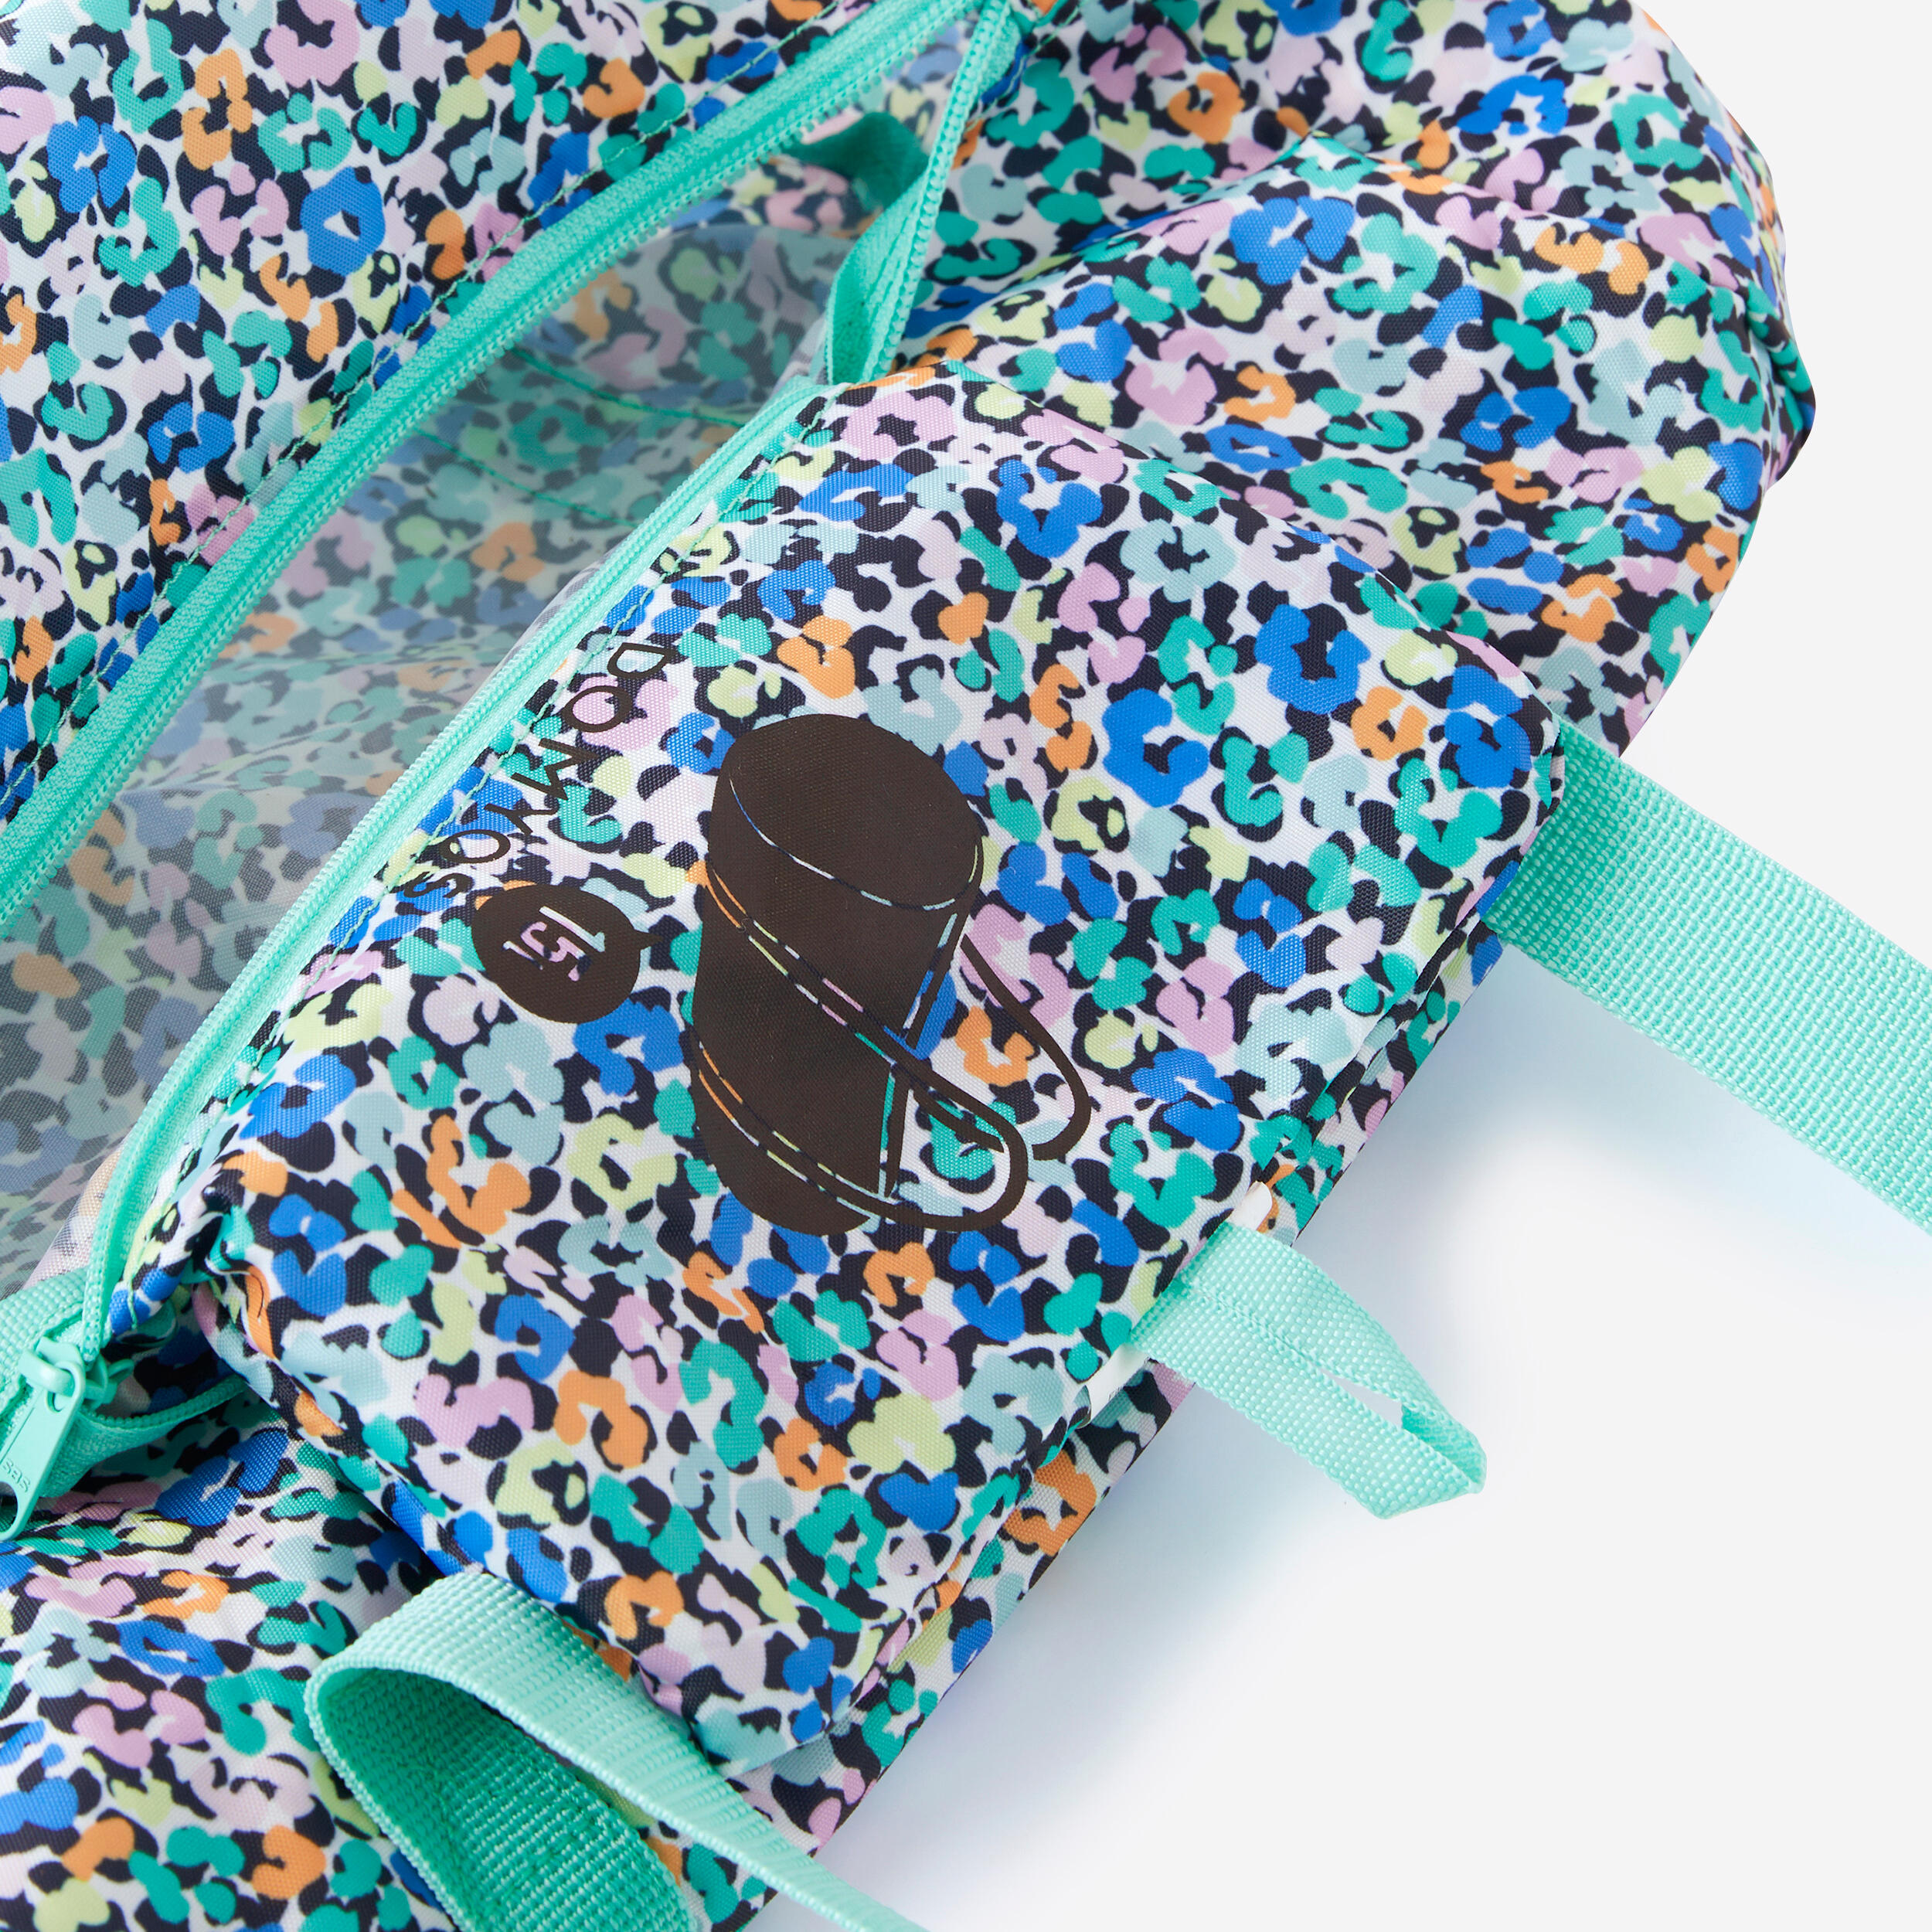 15 L Foldable Sports Bag - Multicoloured 7/8